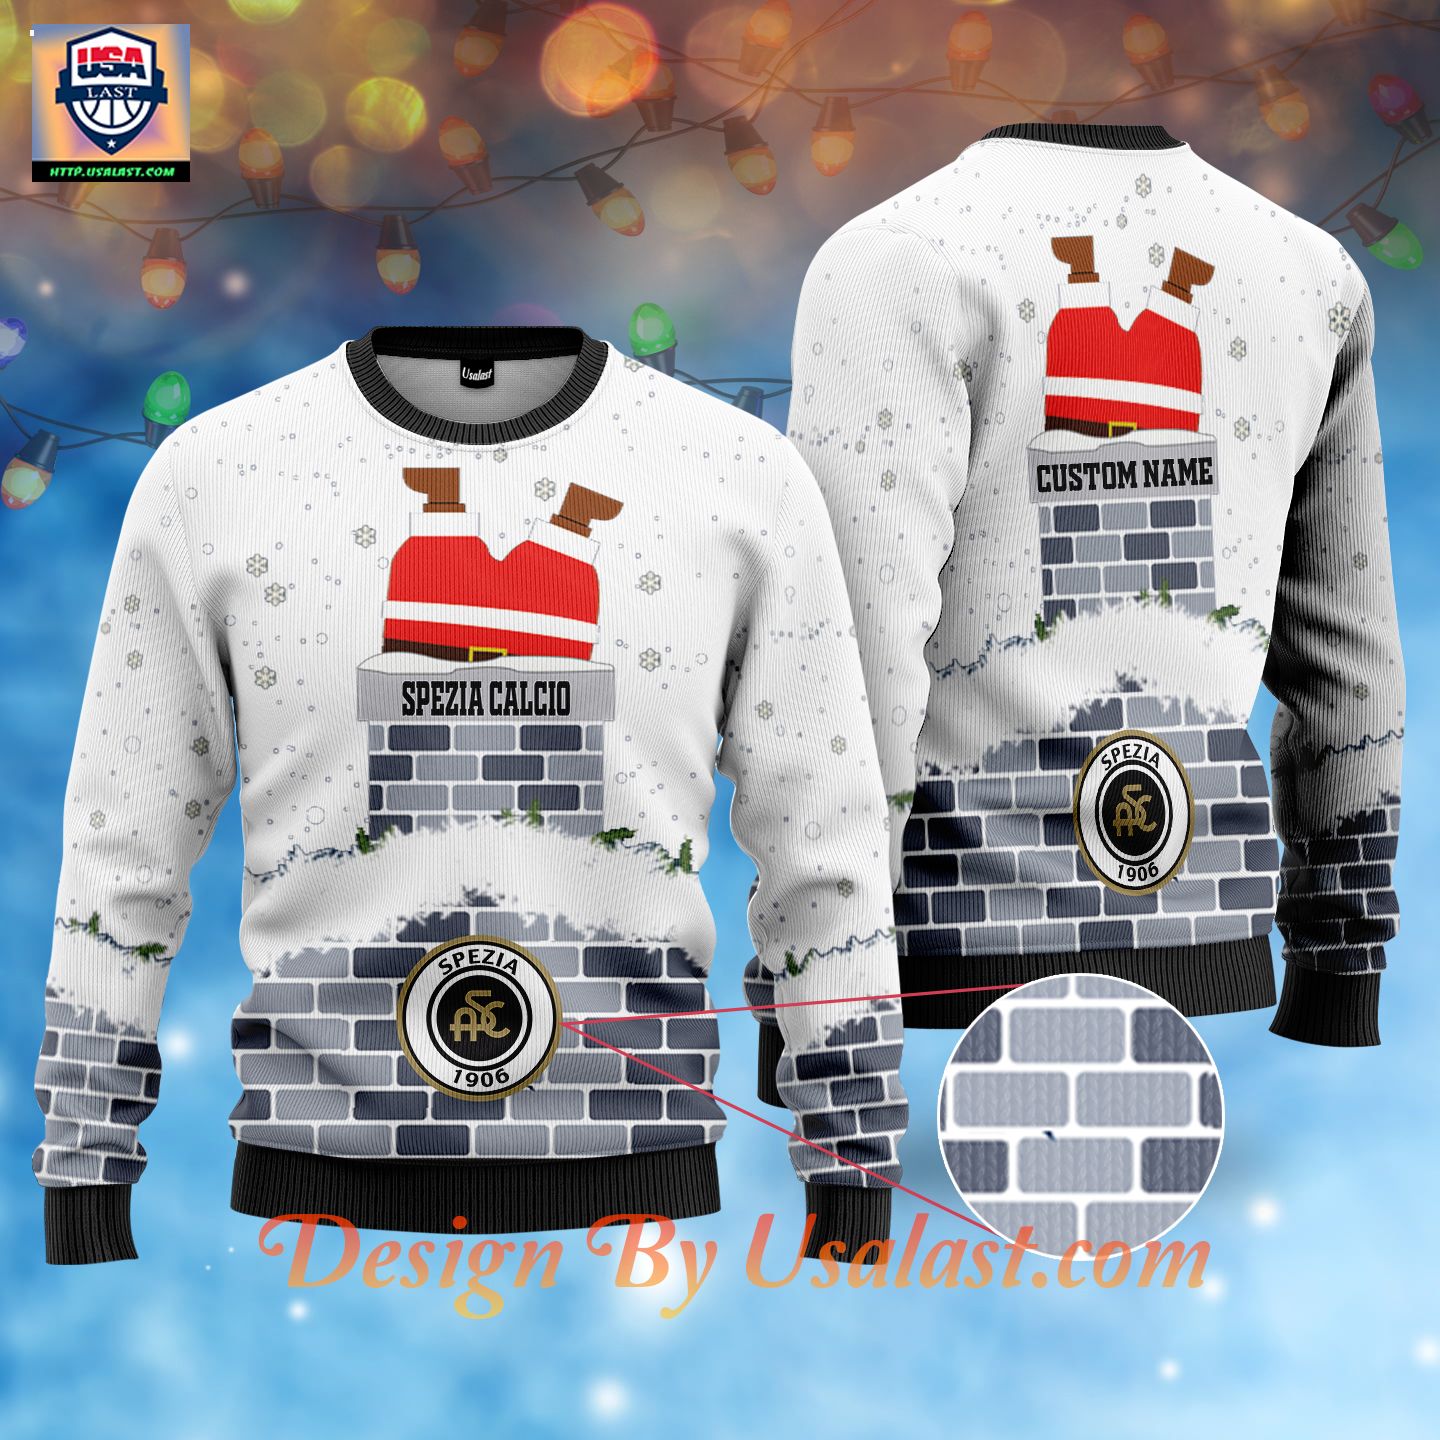 Spezia Calcio Santa Claus Custom Name Ugly Christmas Sweater - Amazing Pic